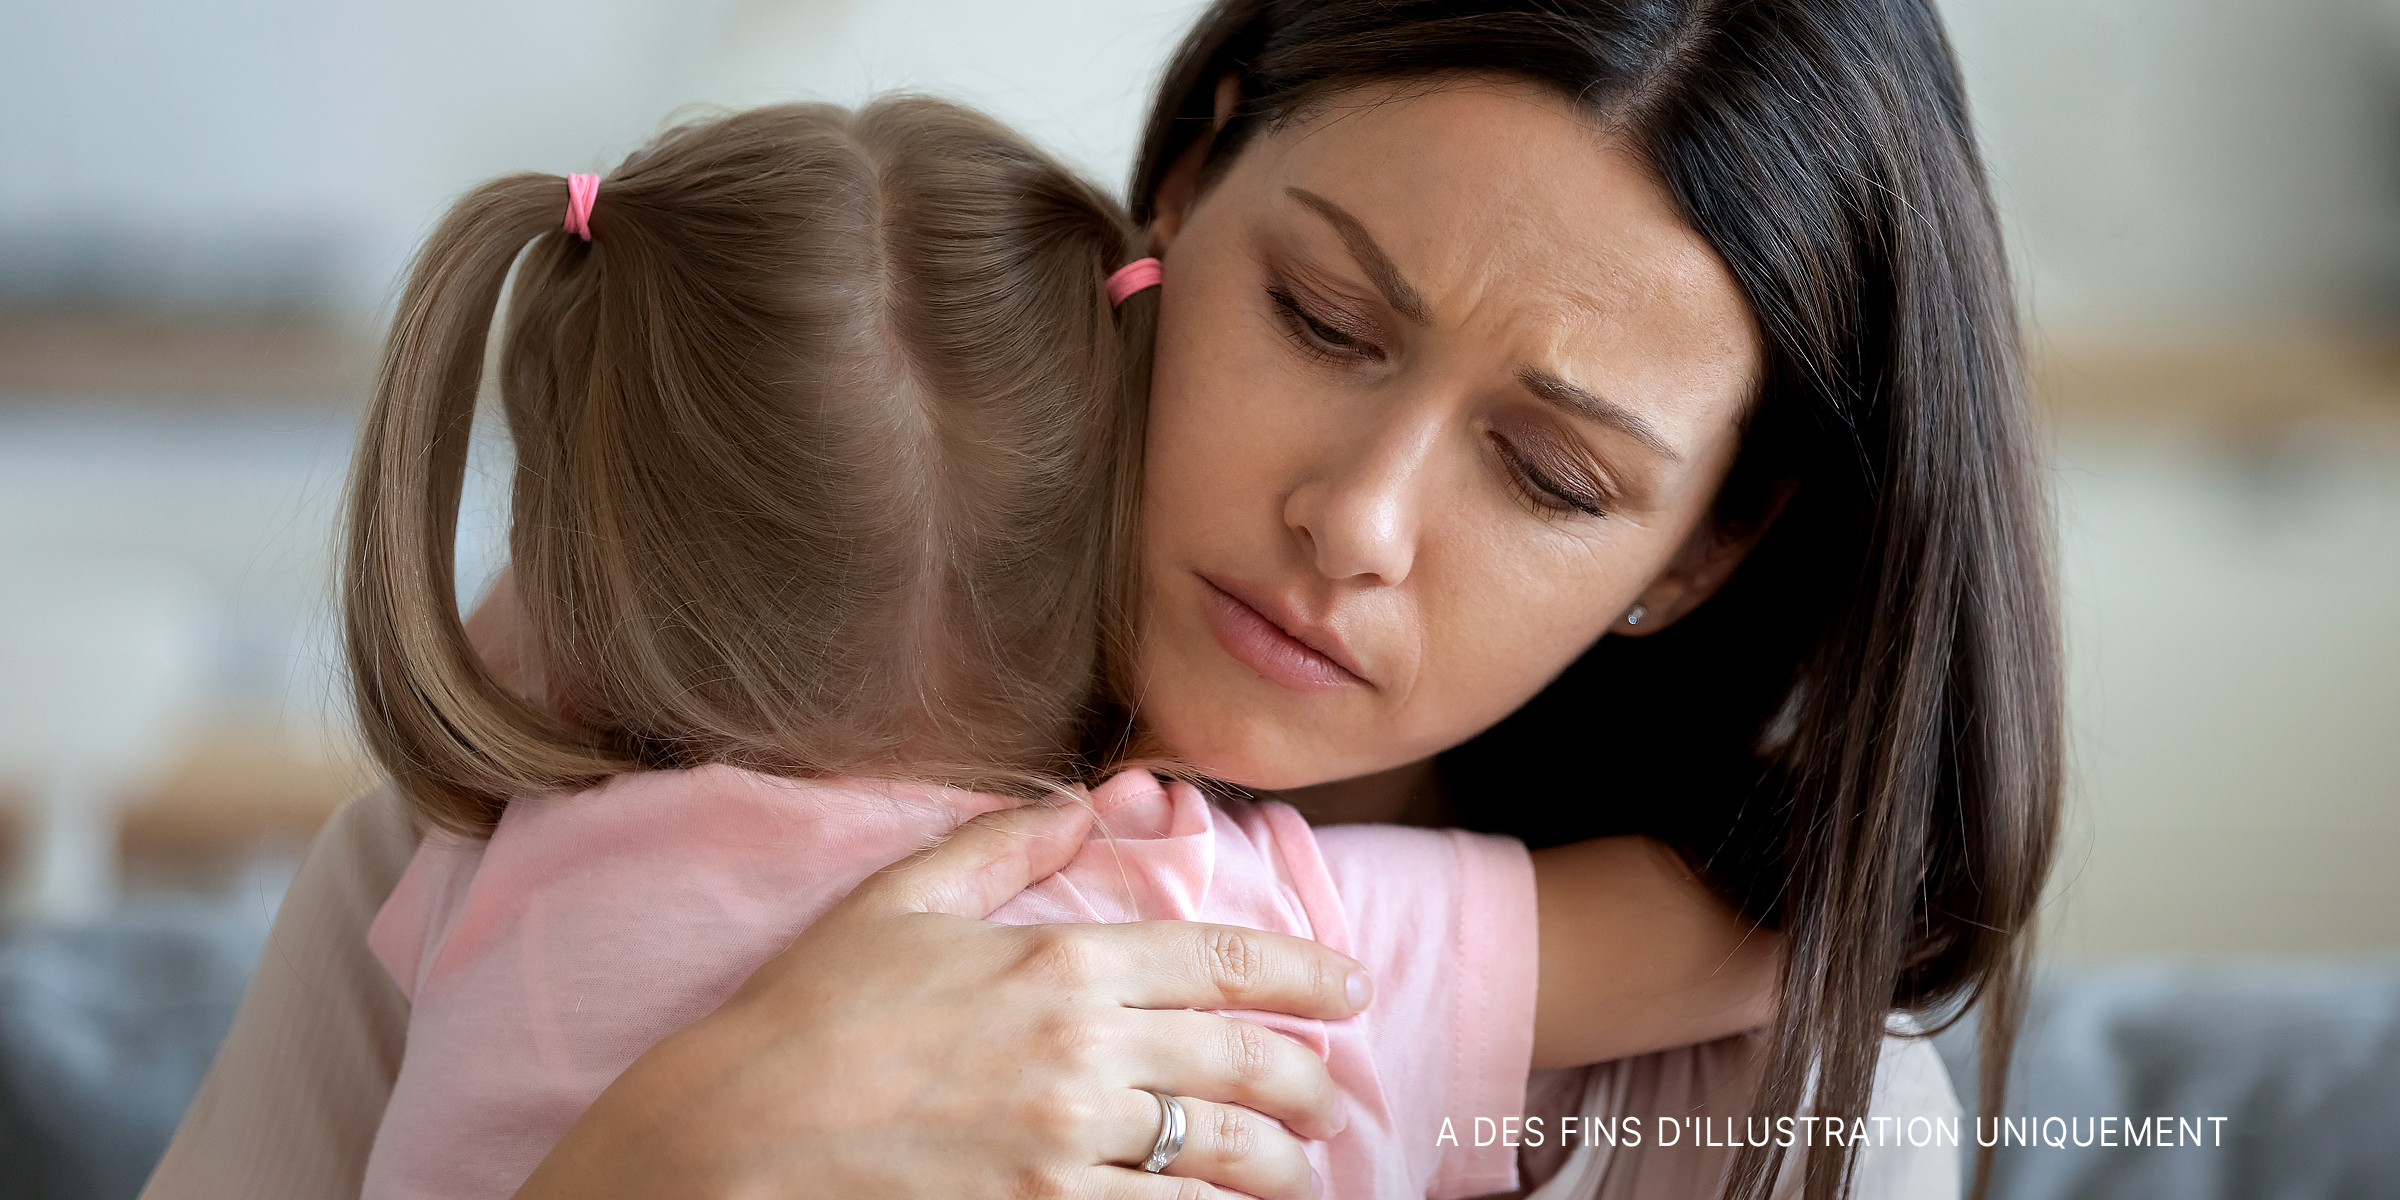 Une femme tenant une petite fille | Source : Shutterstock